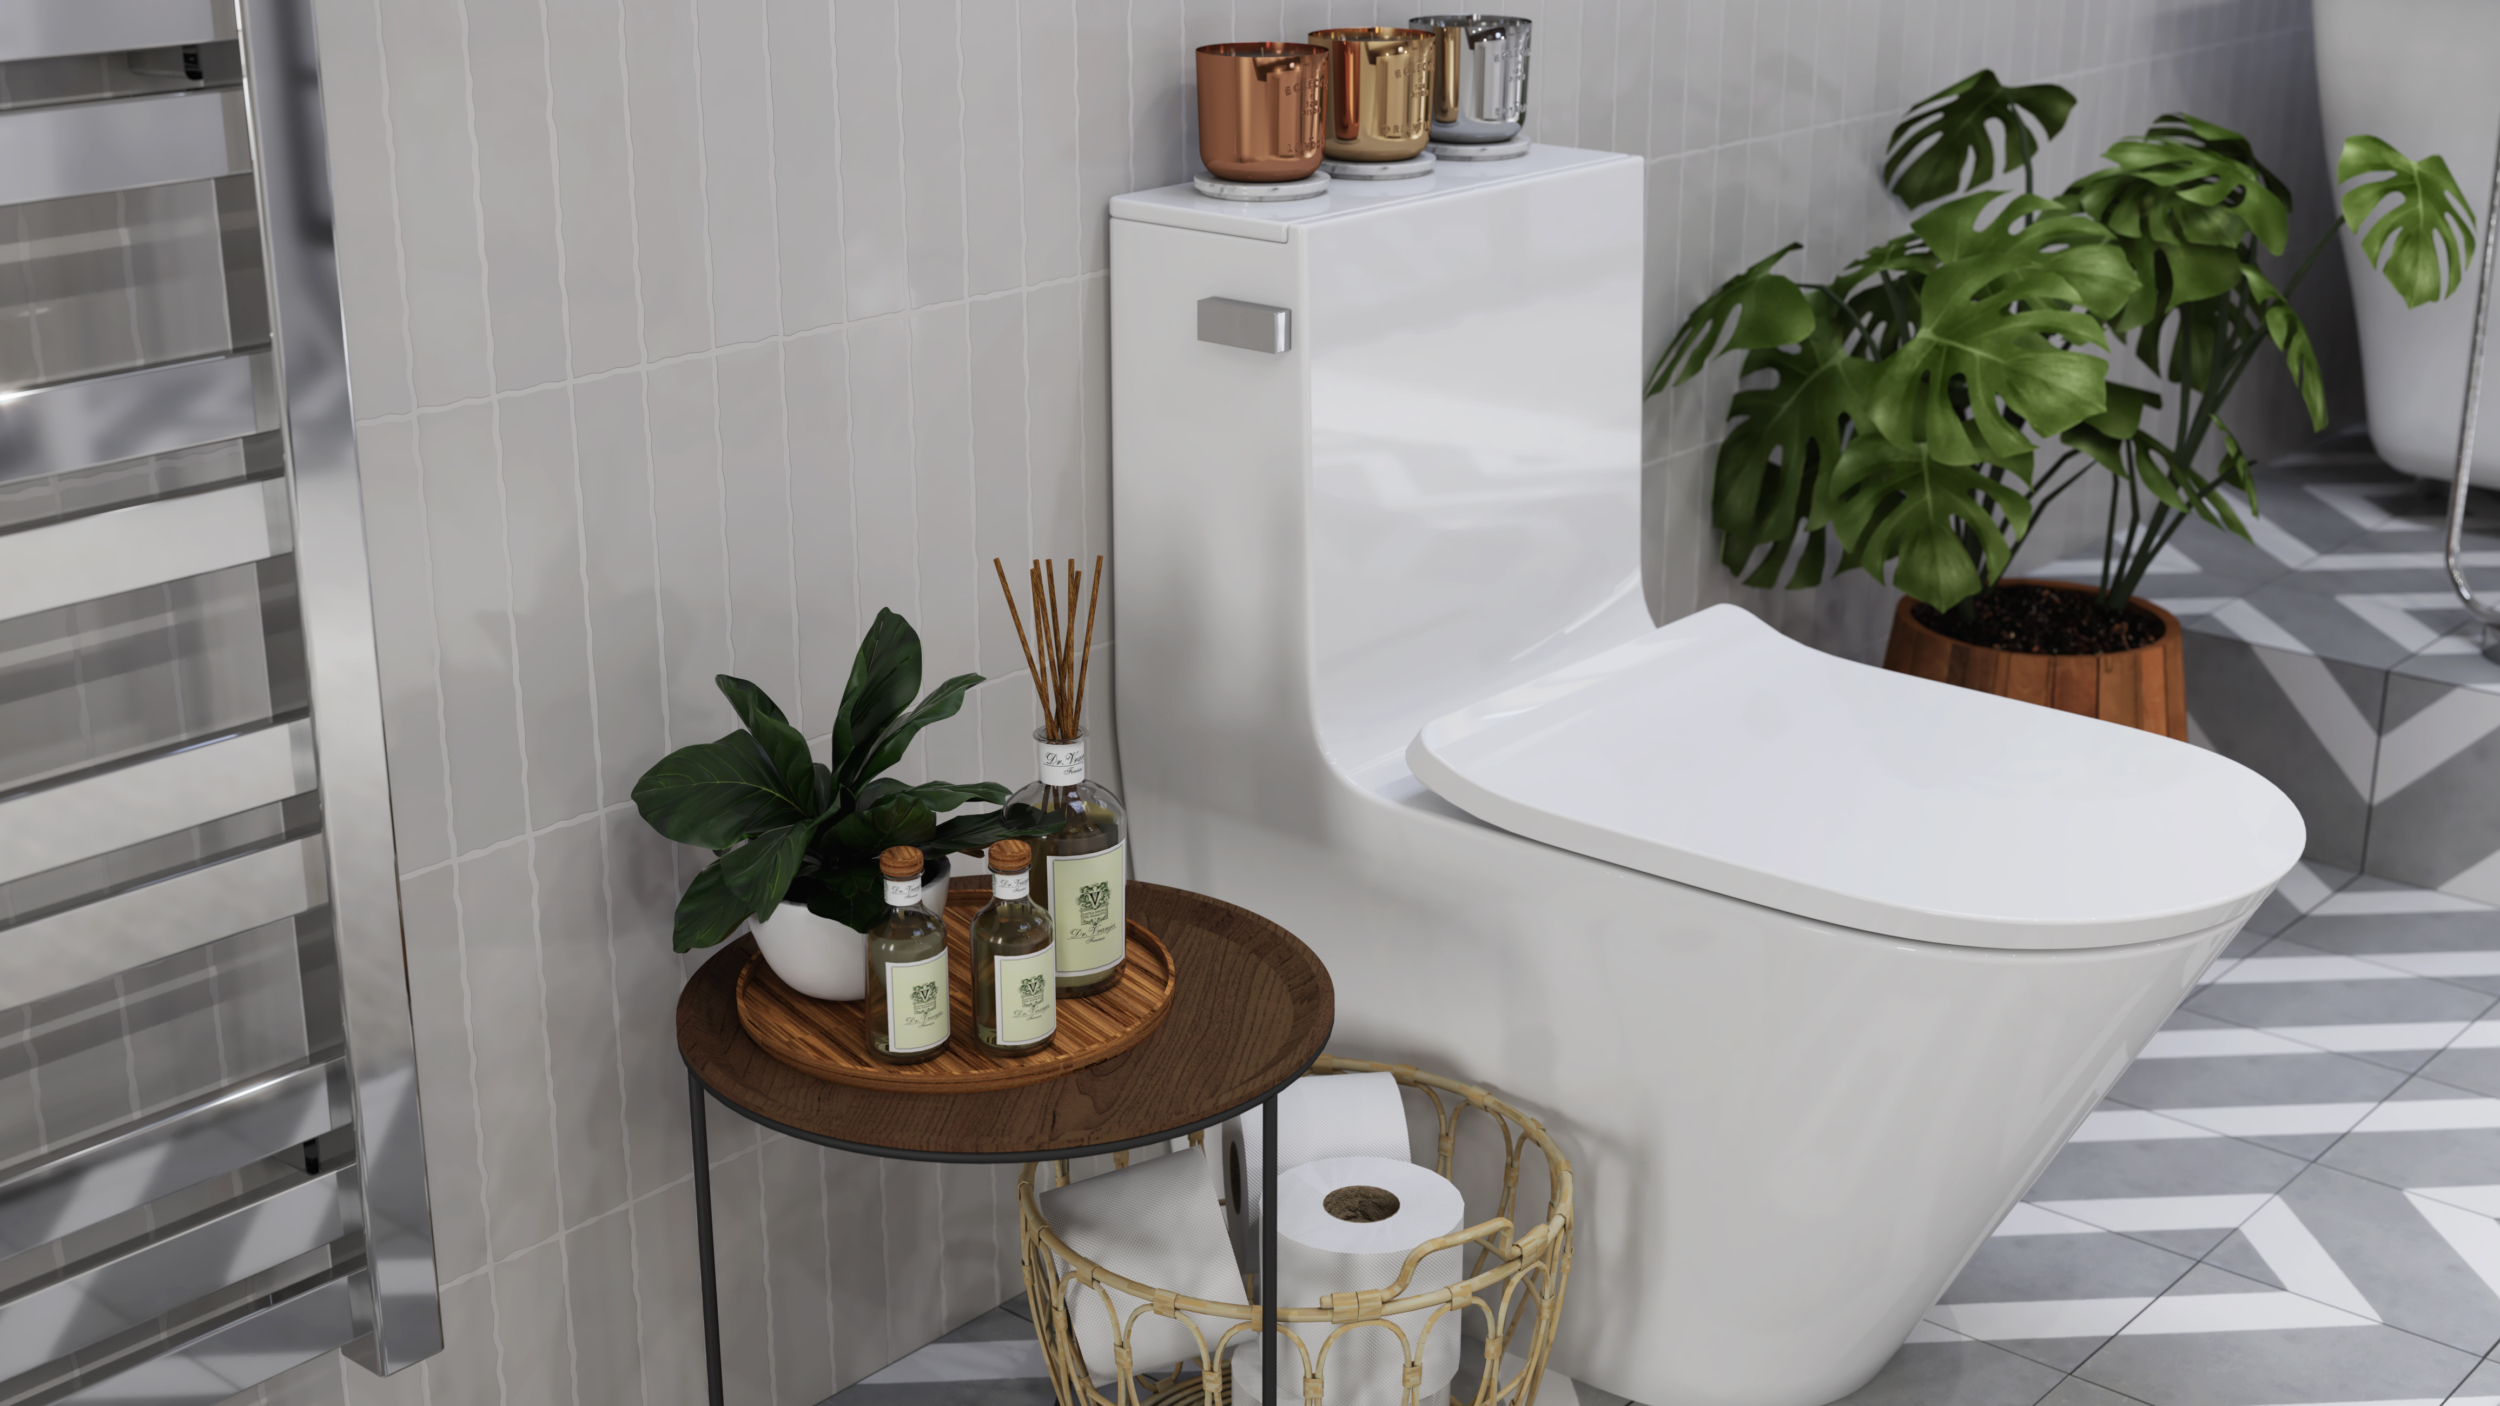 Bathroom Product CGI, Toilet Shot, Linear CGI Studio